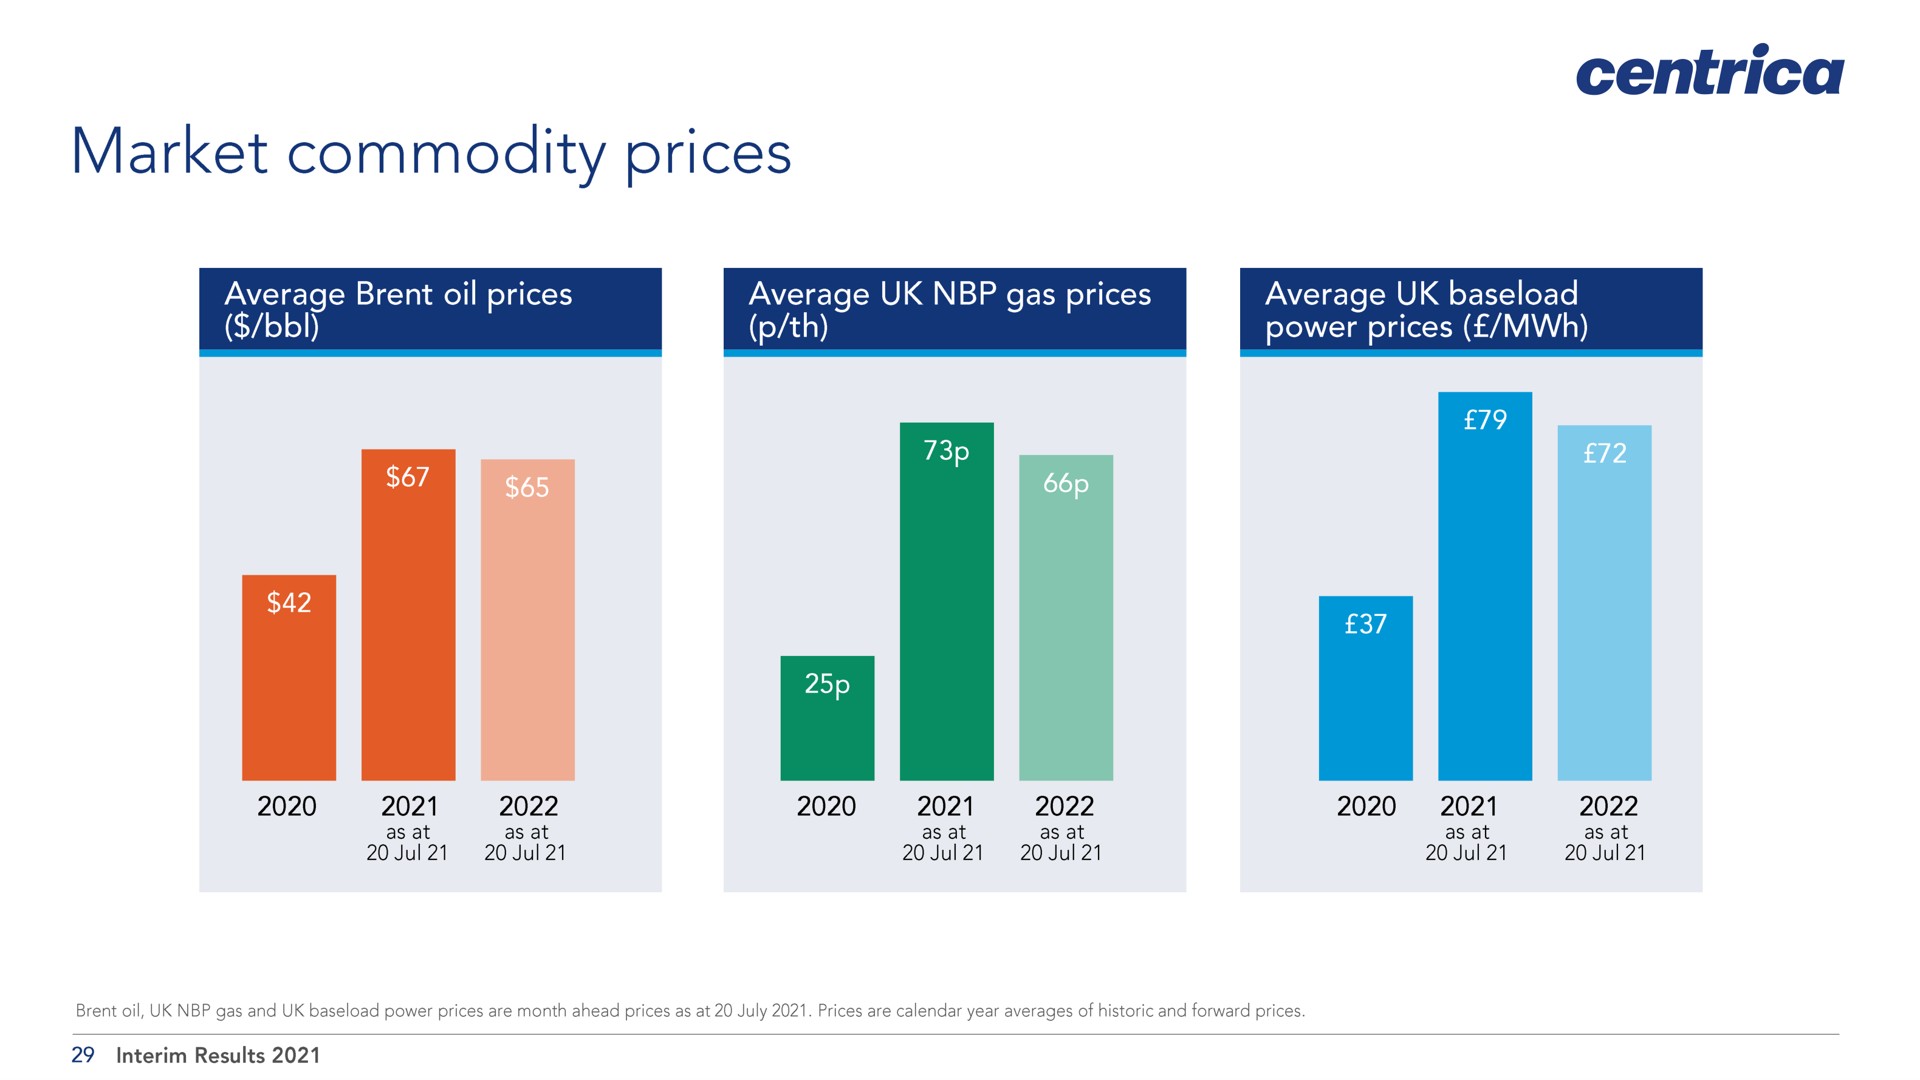 market commodity prices | Centrica